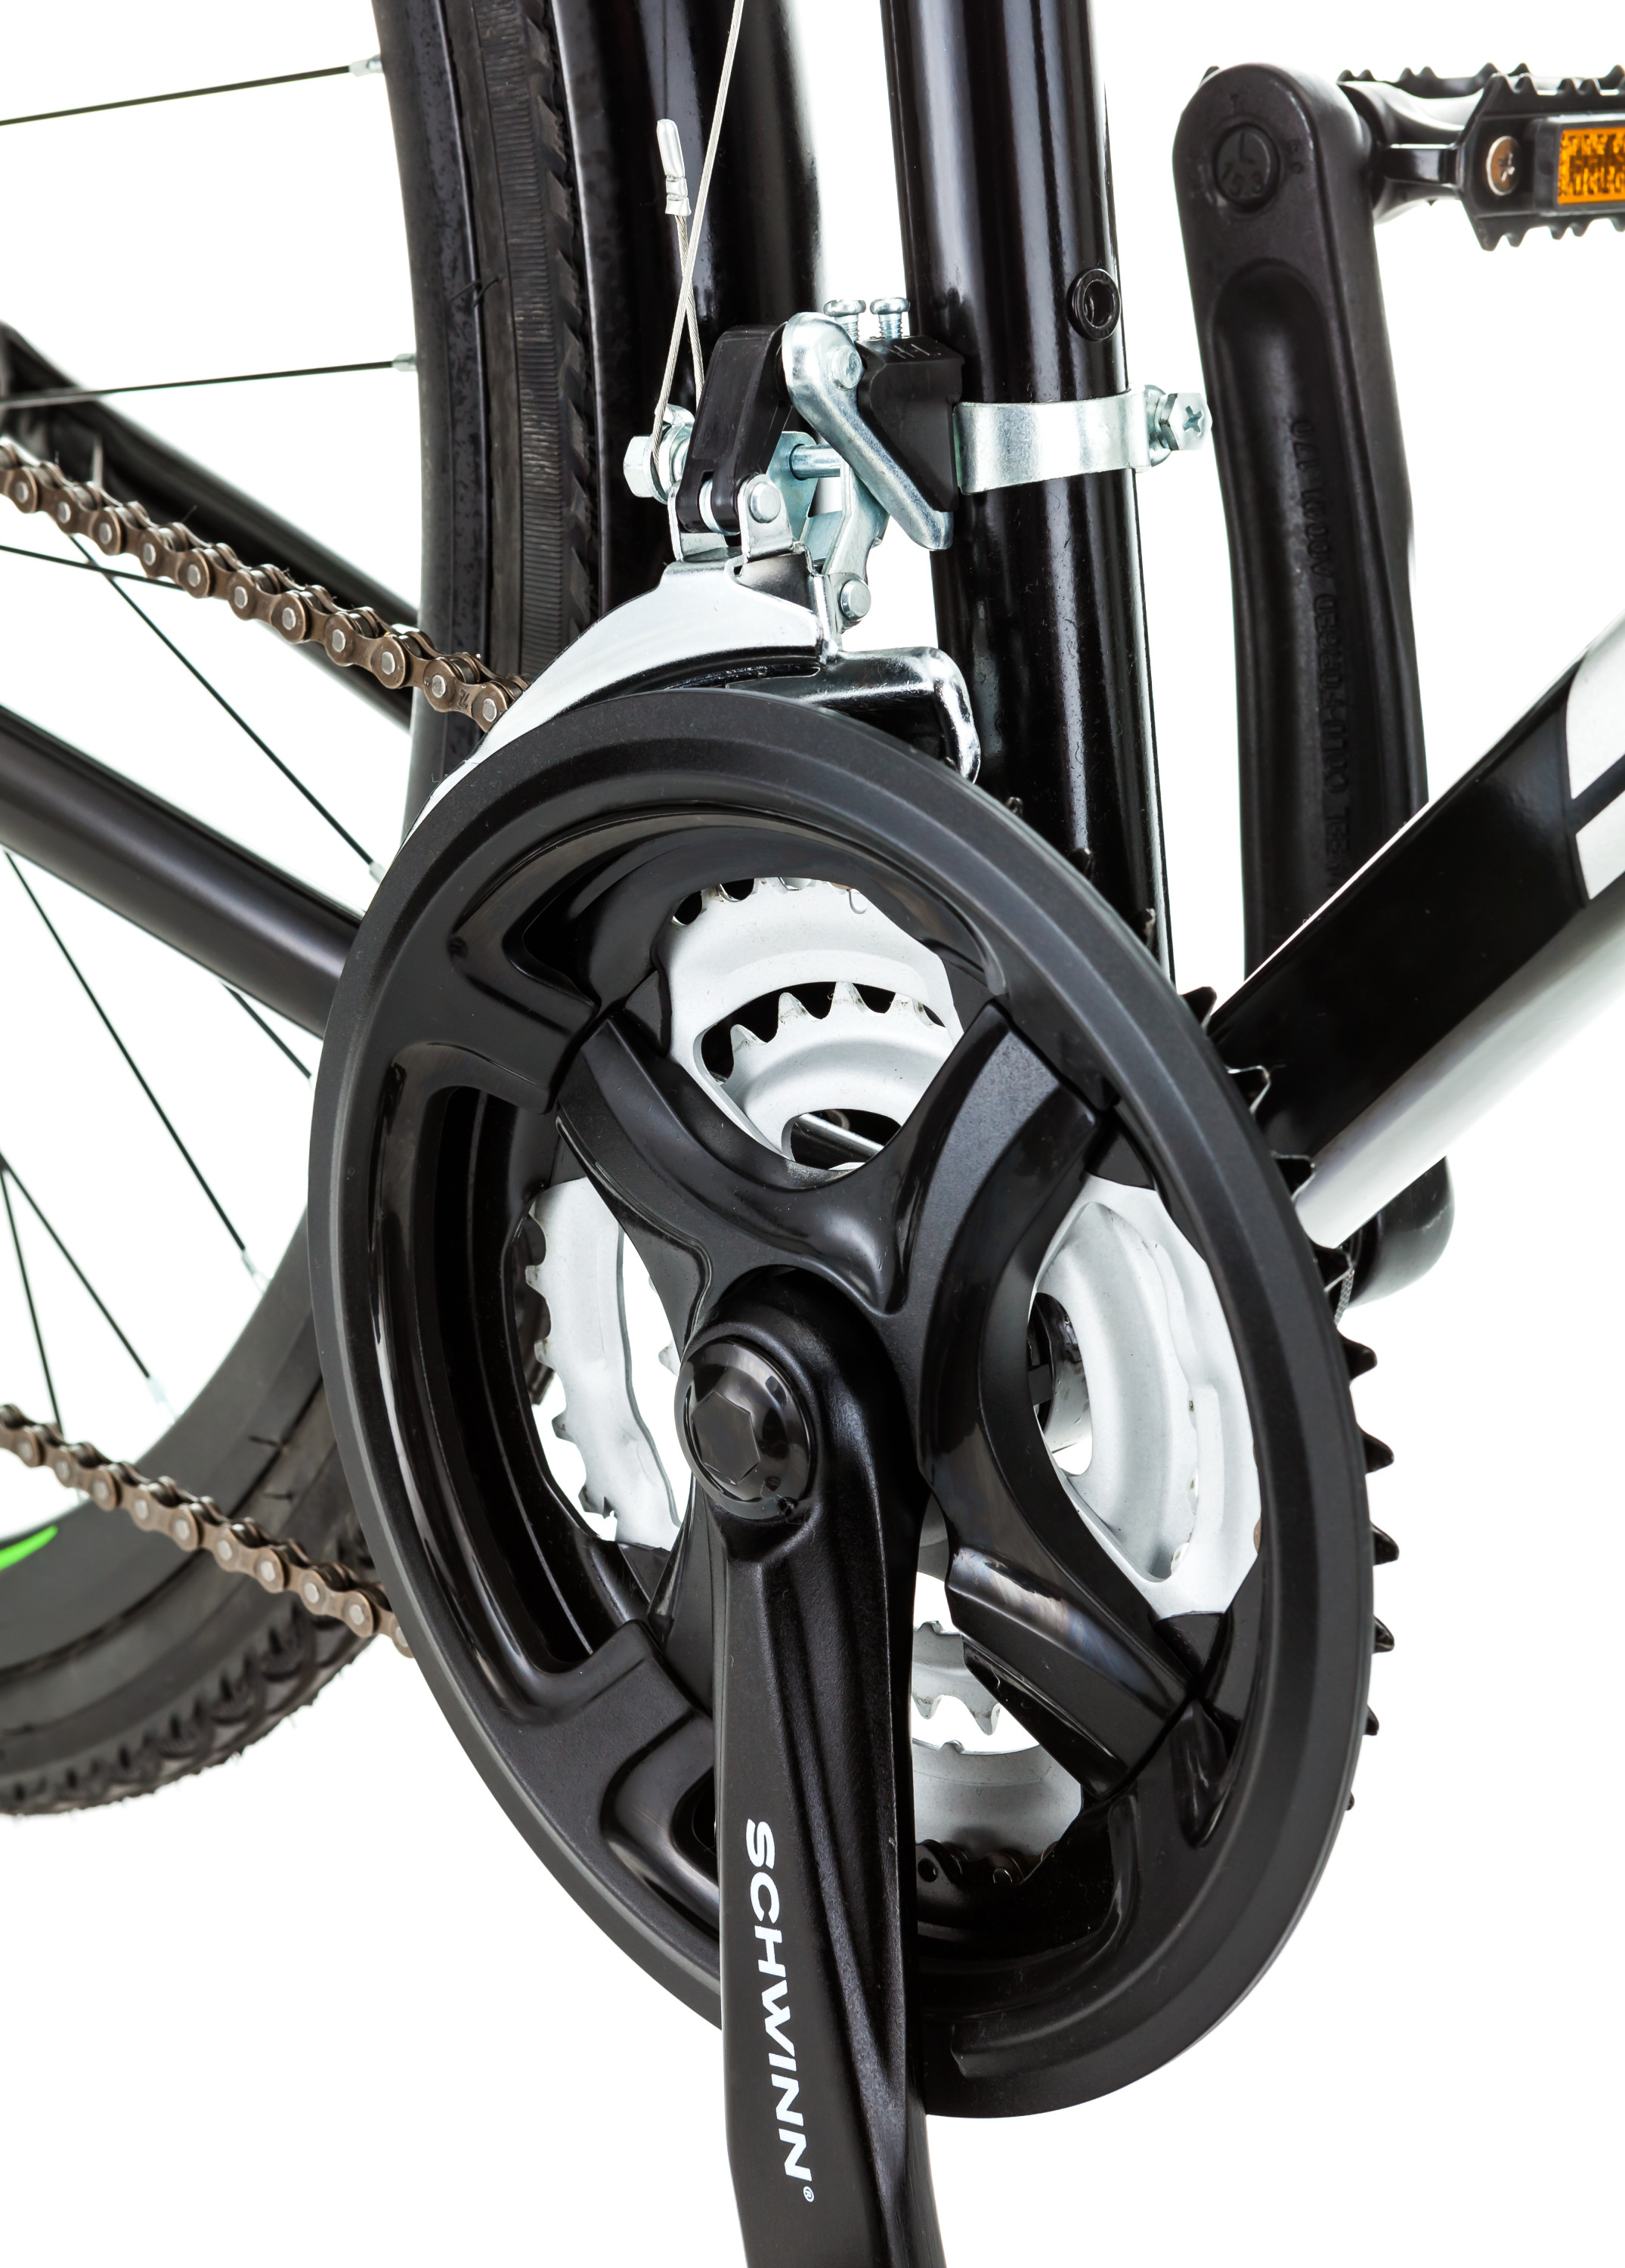 Schwinn Central Men's Commuter Bike, 700c wheels, 21 speeds, Black - image 3 of 10